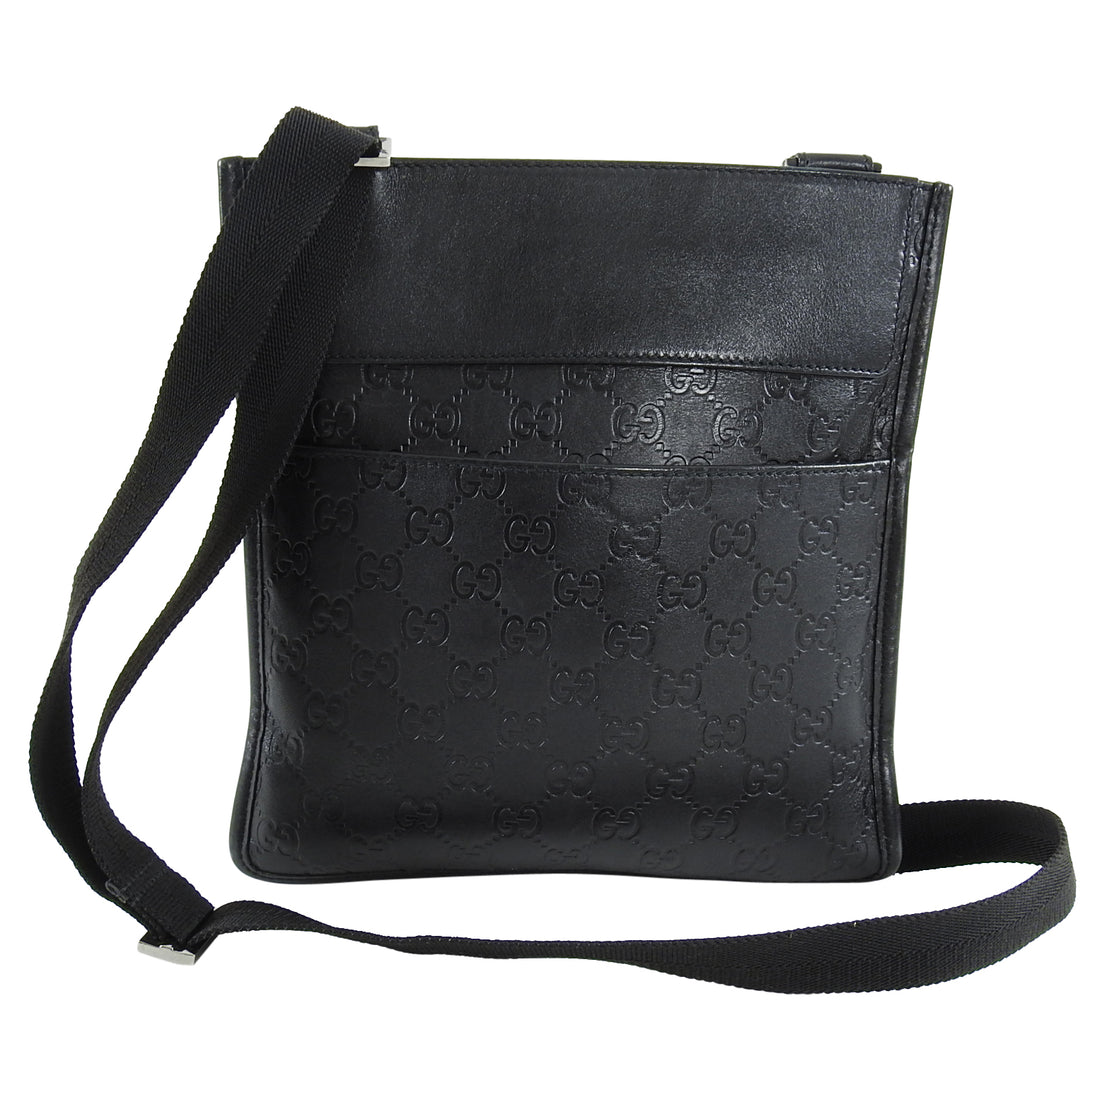 Gucci Guccissima Black GG Leather Monogram Crossbody Bag – I MISS YOU